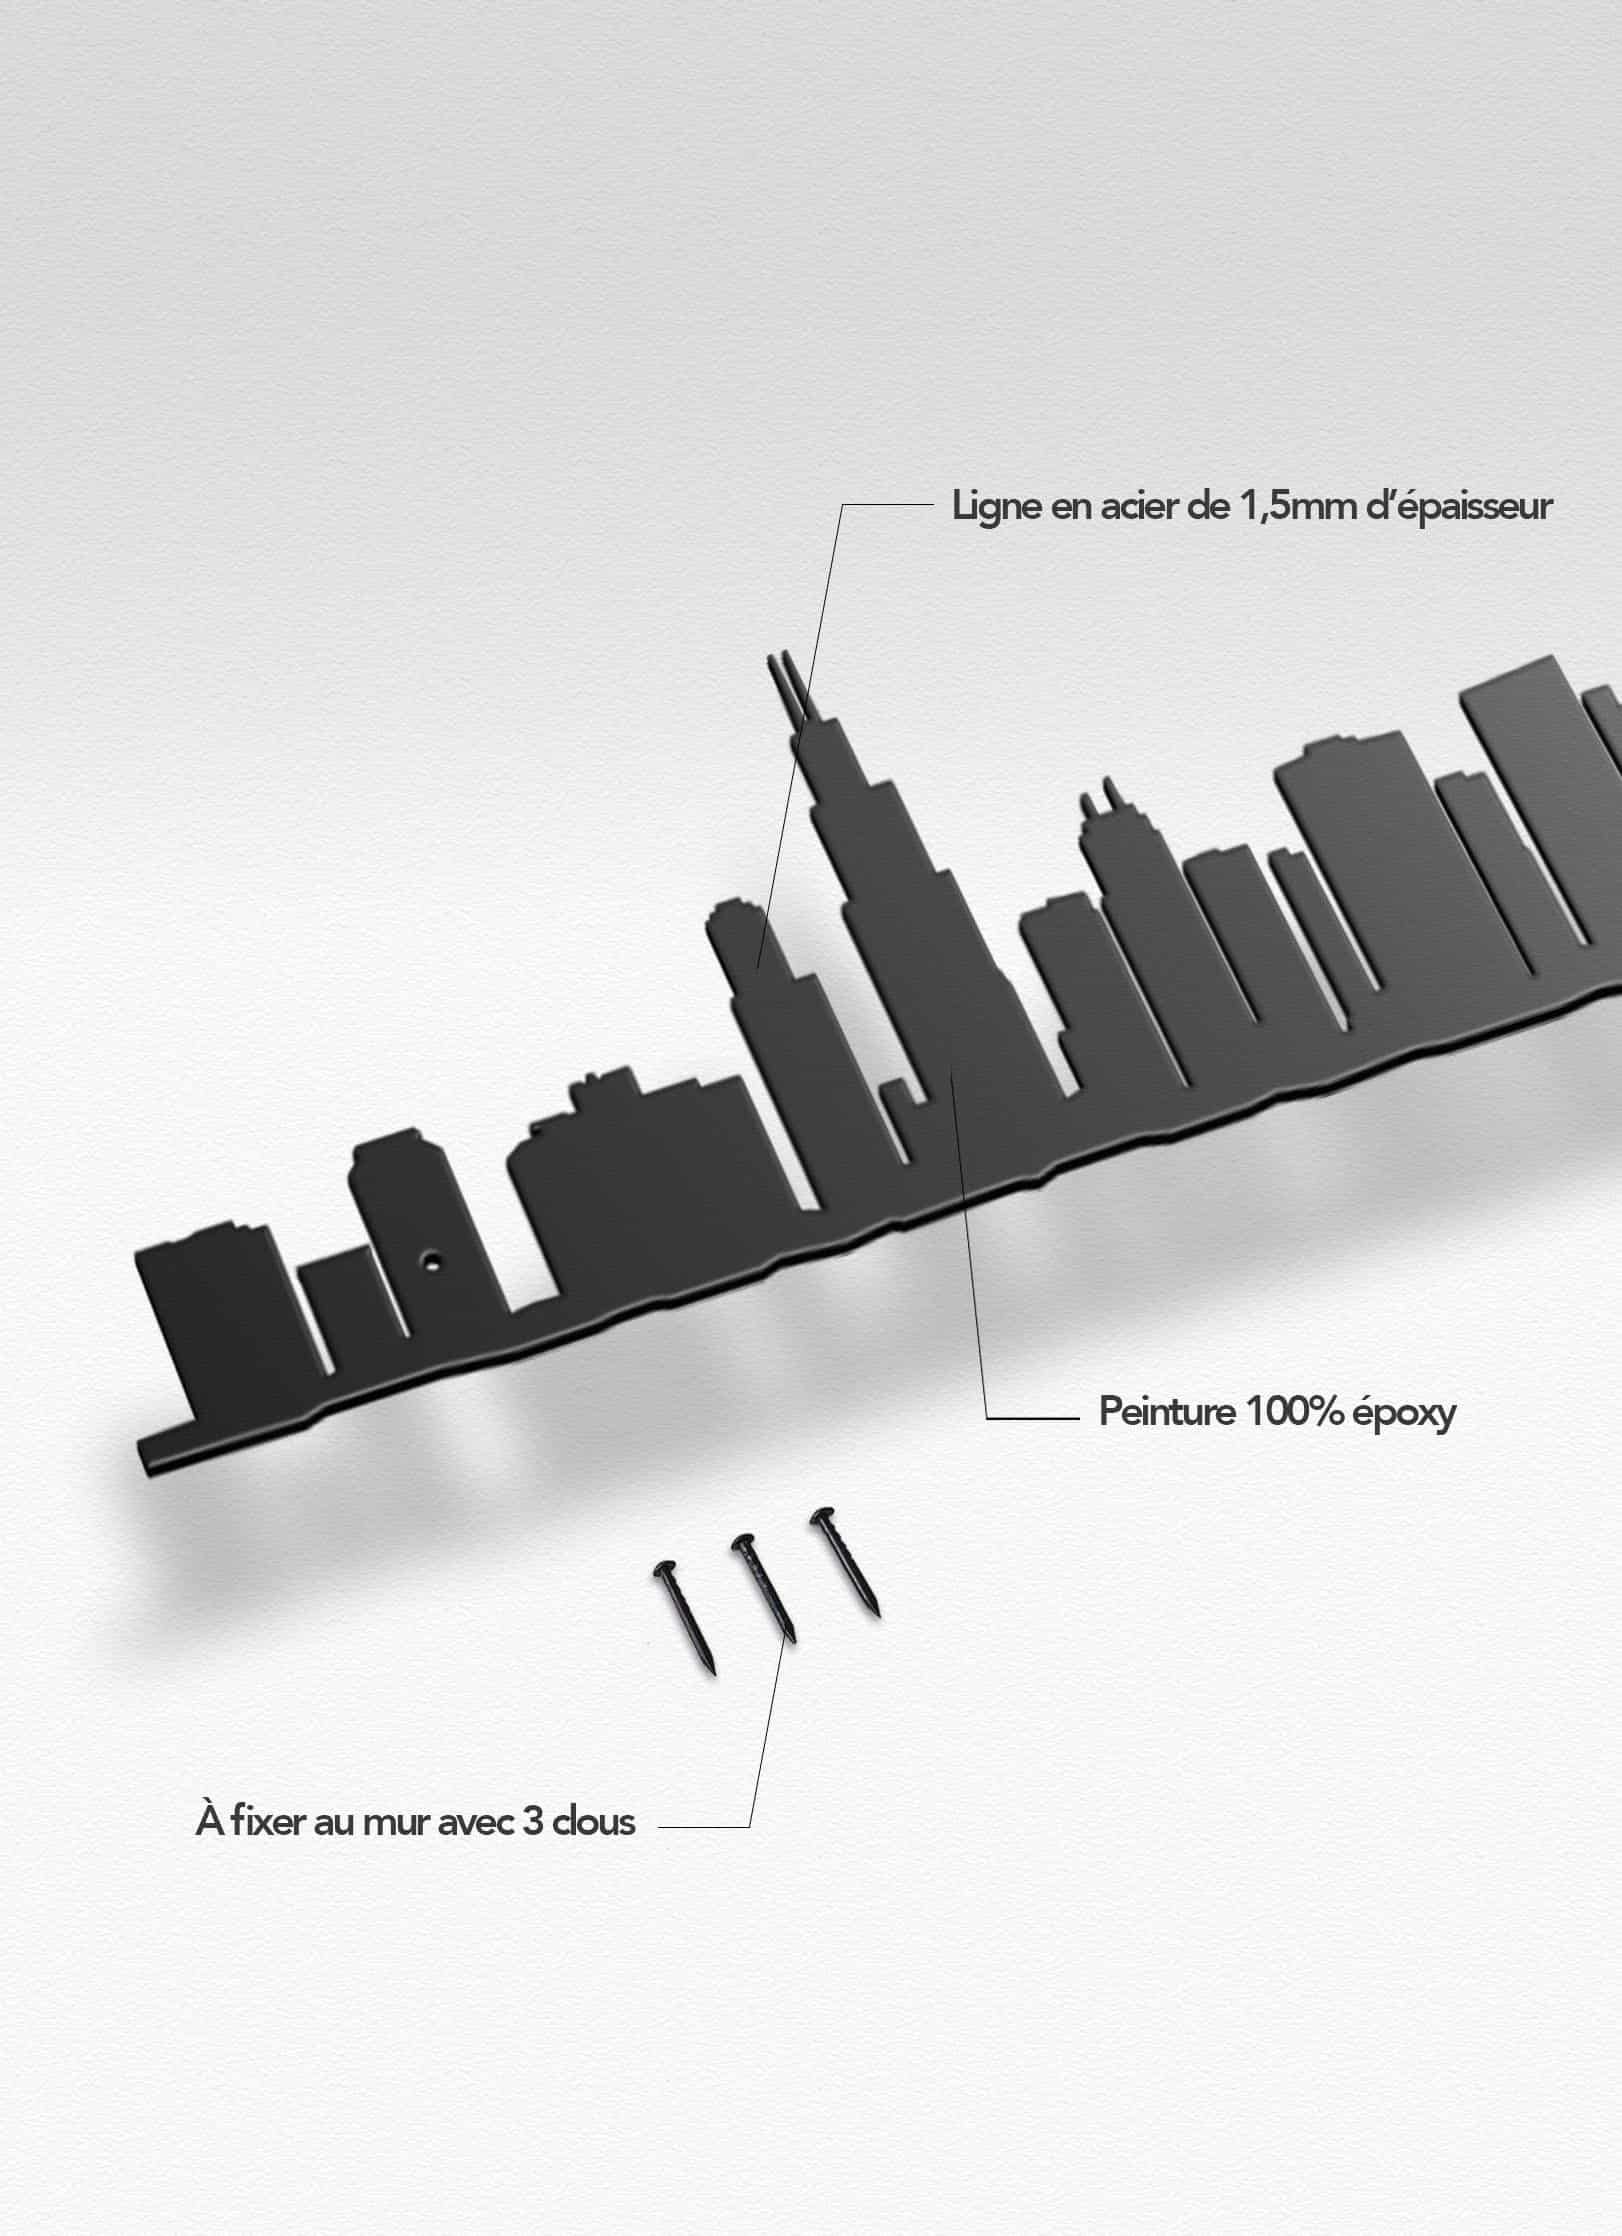 Presentation of the skyline of Chicago